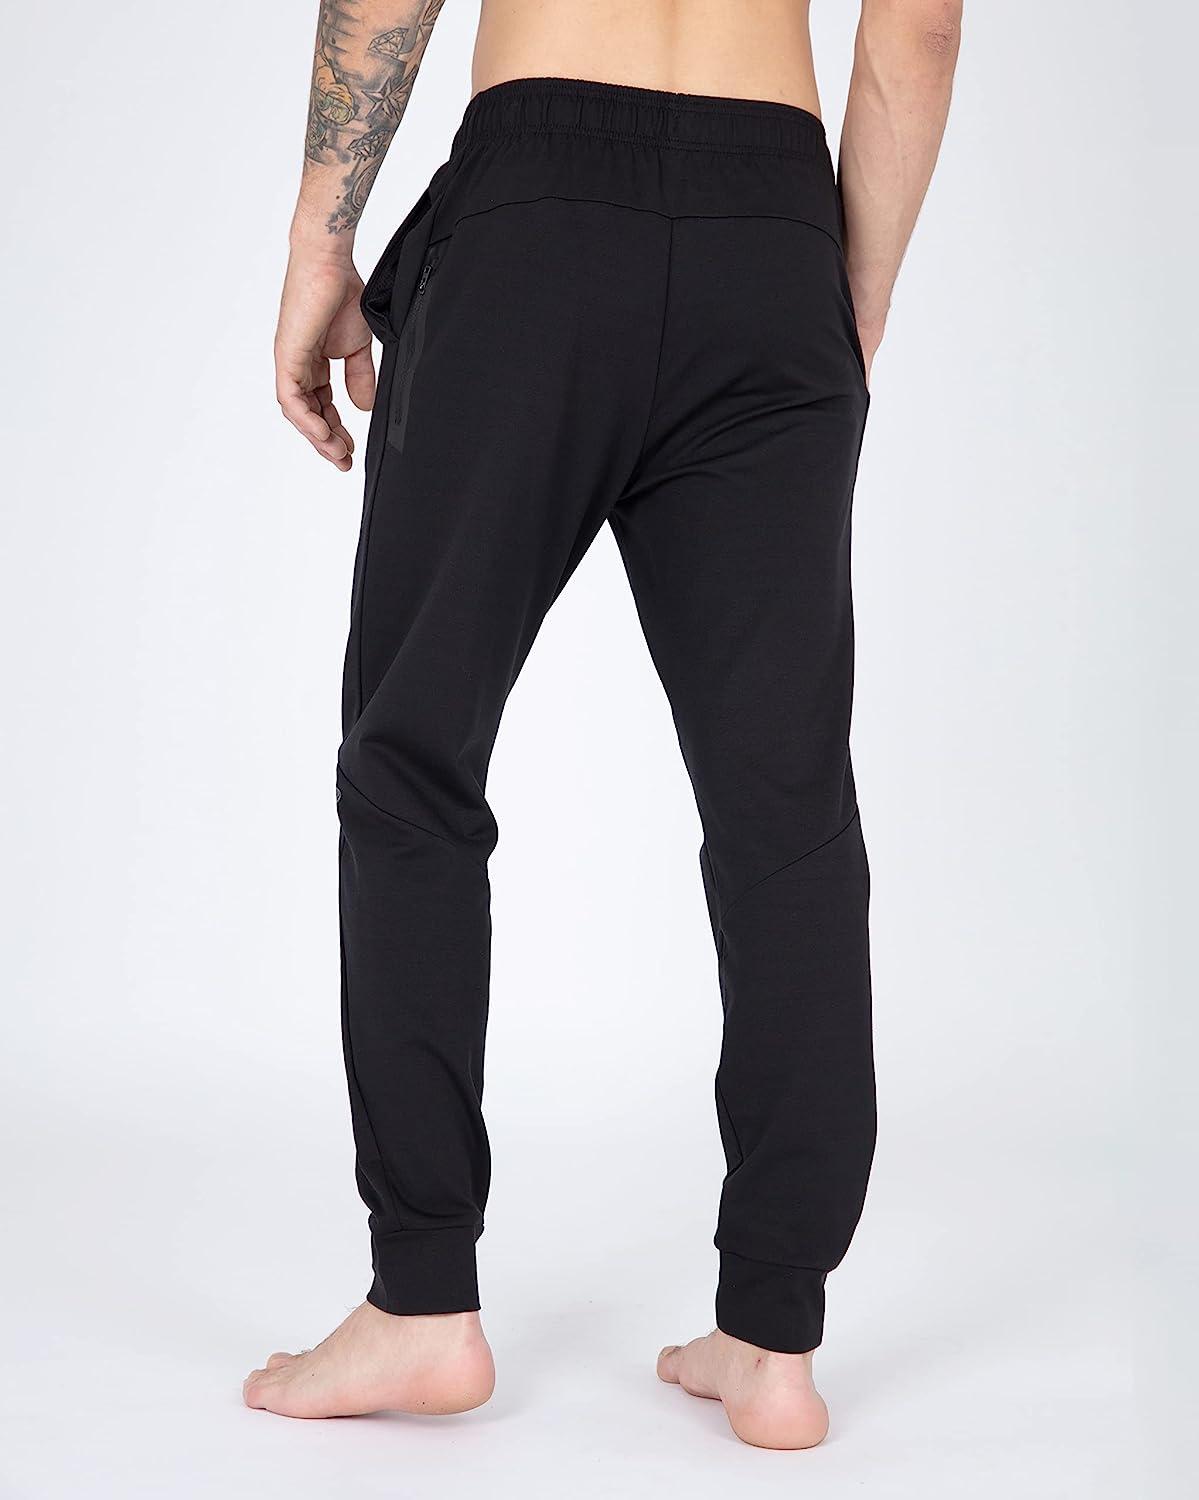 Apana, Pants & Jumpsuits, Apana Yoga Black Travel Pants